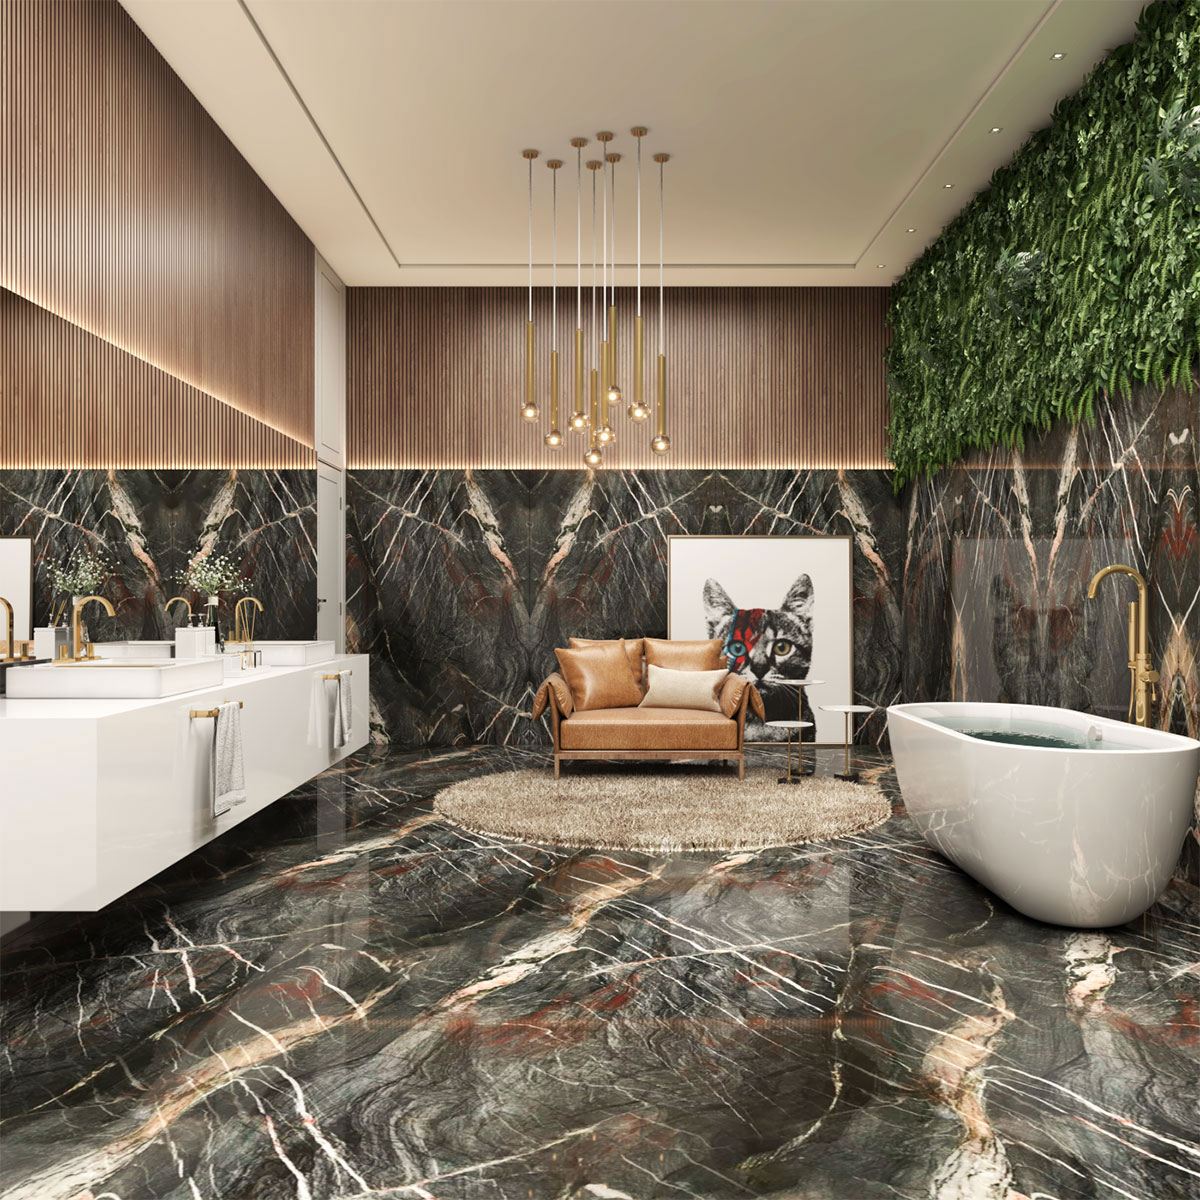 Crytos Quartzite Floor and Bathtub Wall in Bathroom